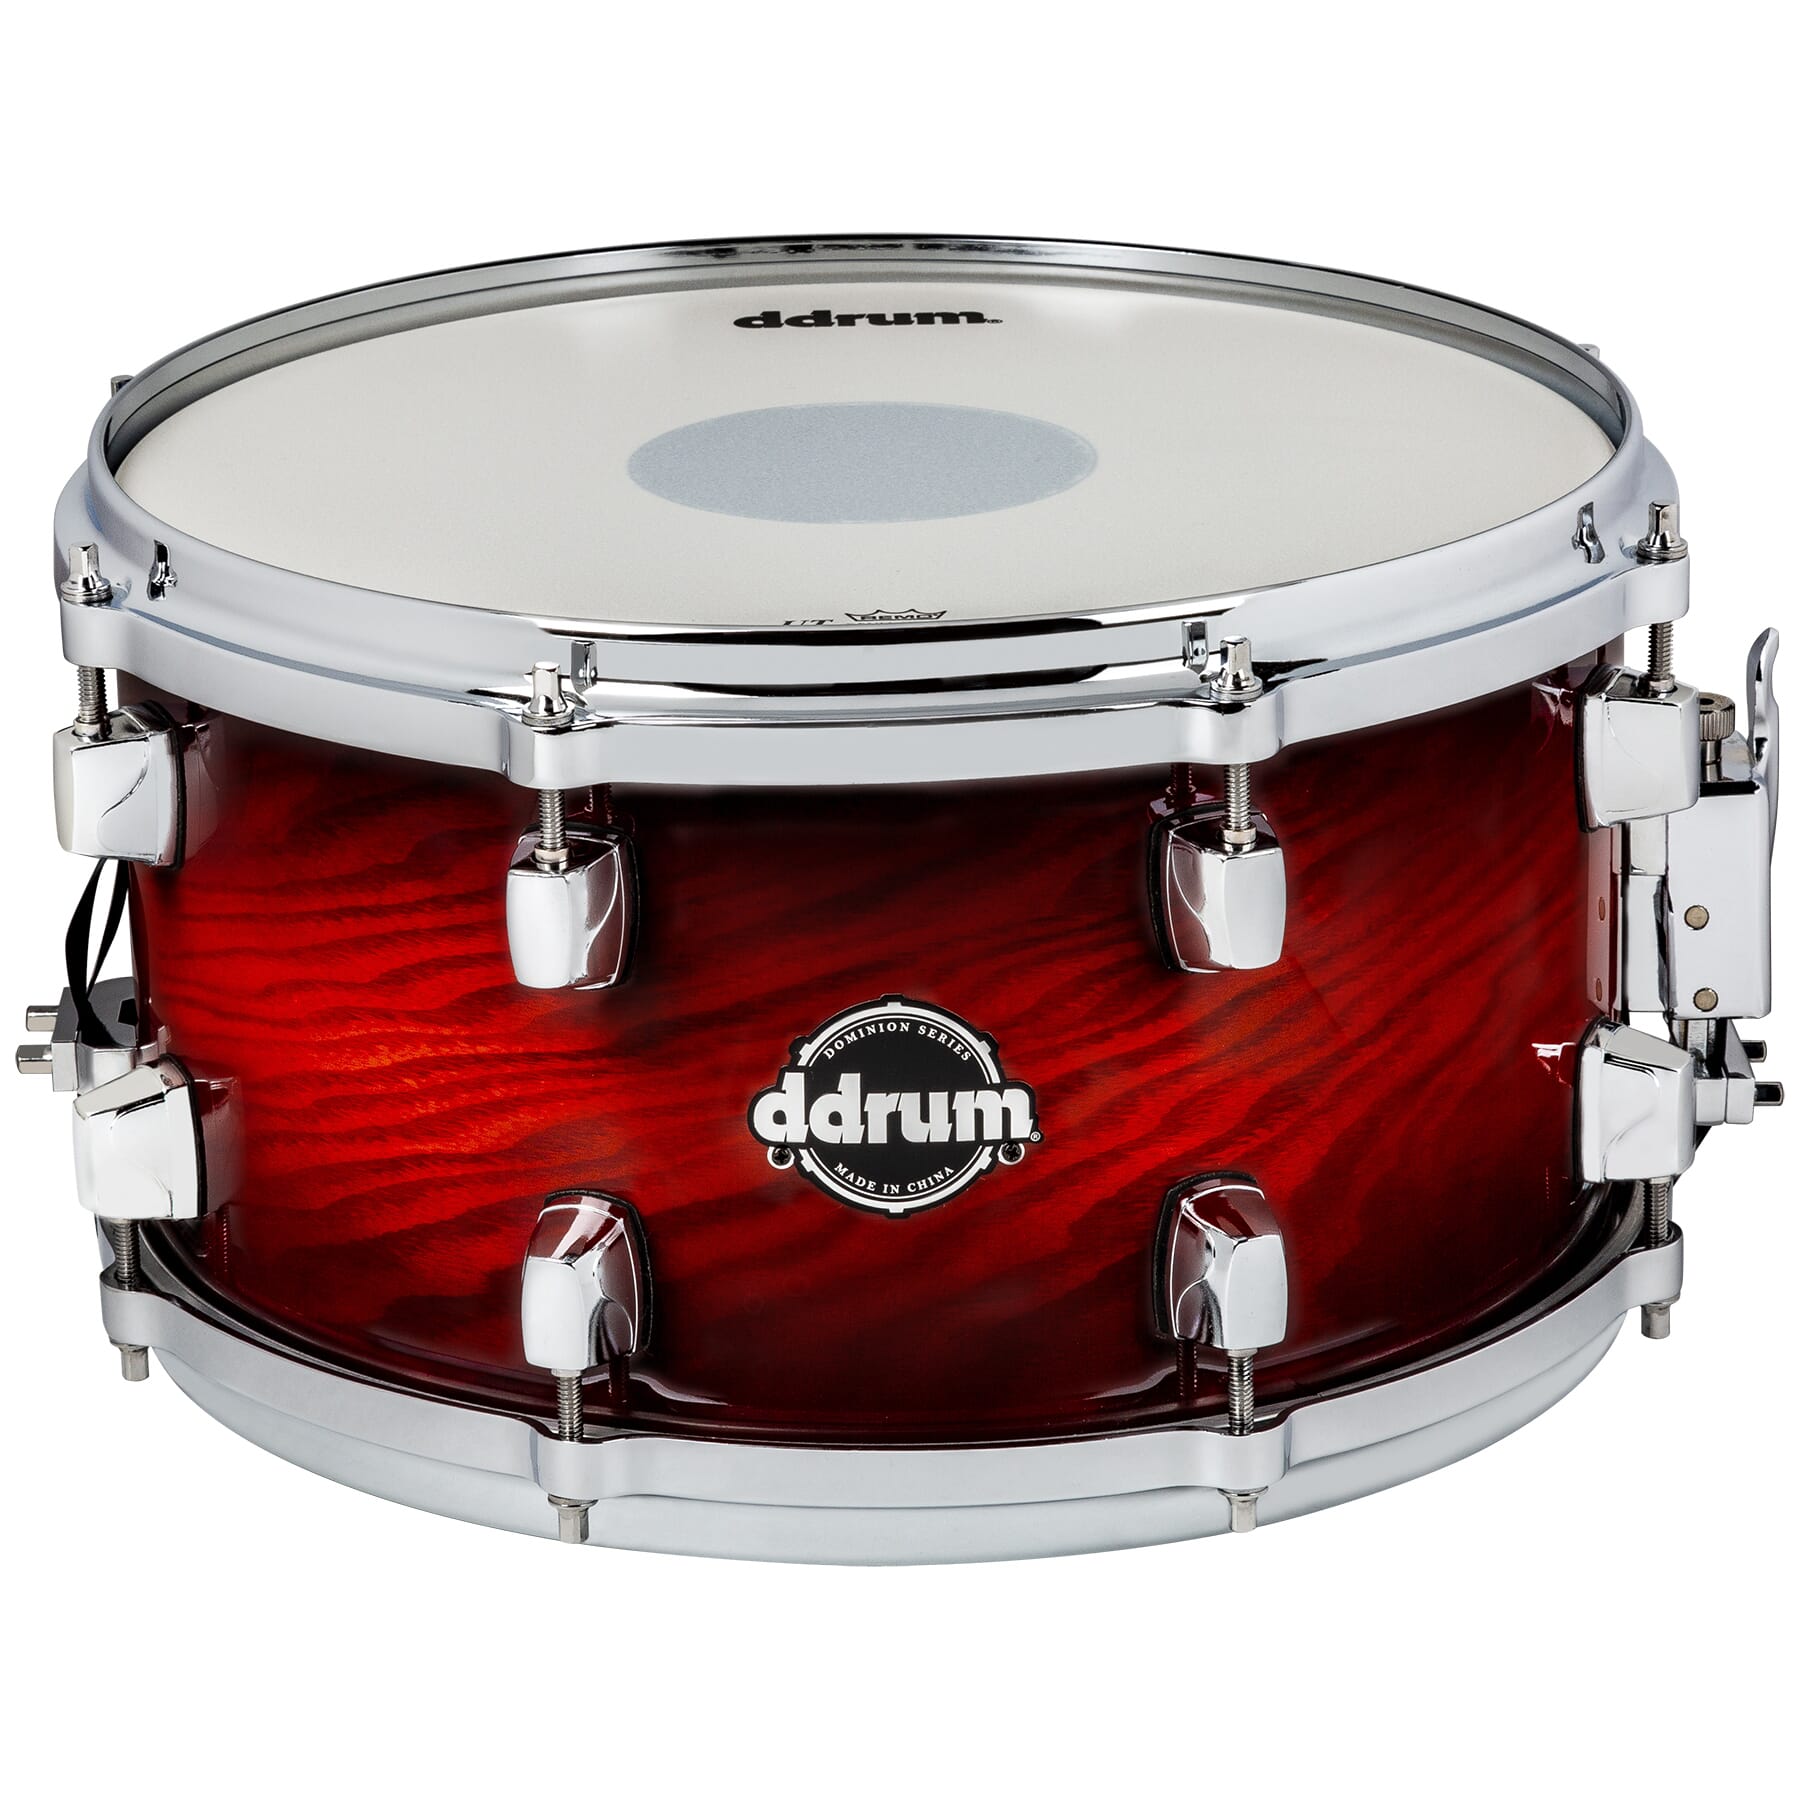 Dominion Series 7x13 Red Burst Snare Drum